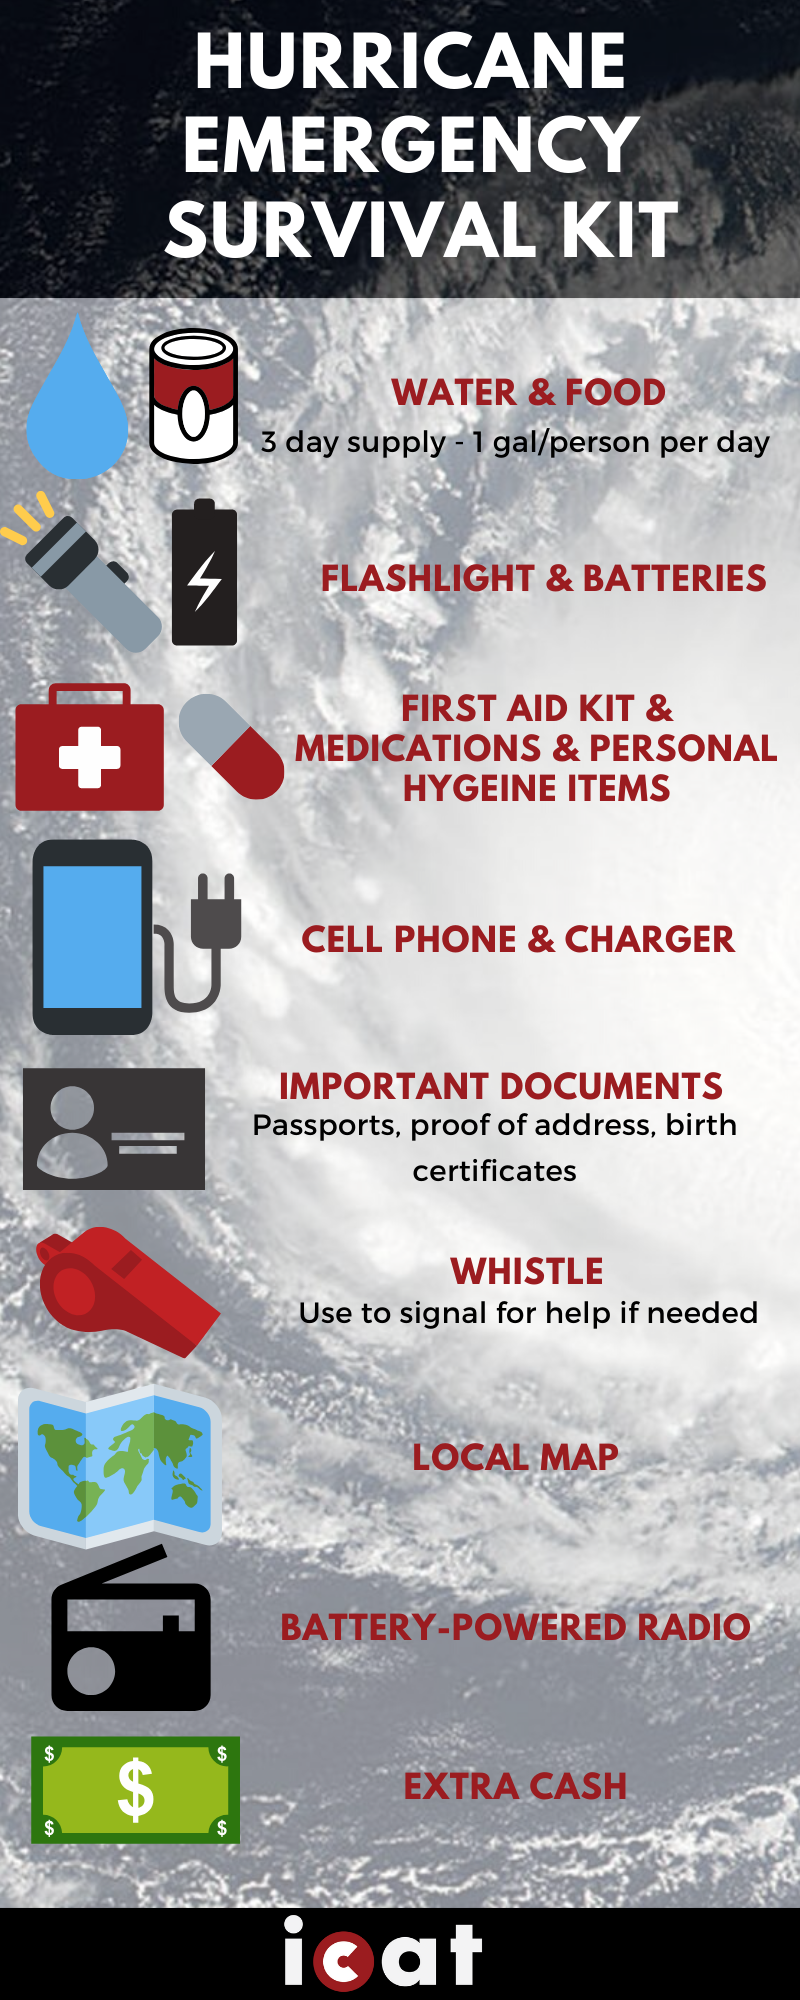 https://www.icat.com/images/uploads/main/hurricane_emergency_prep_kit_infographic.png